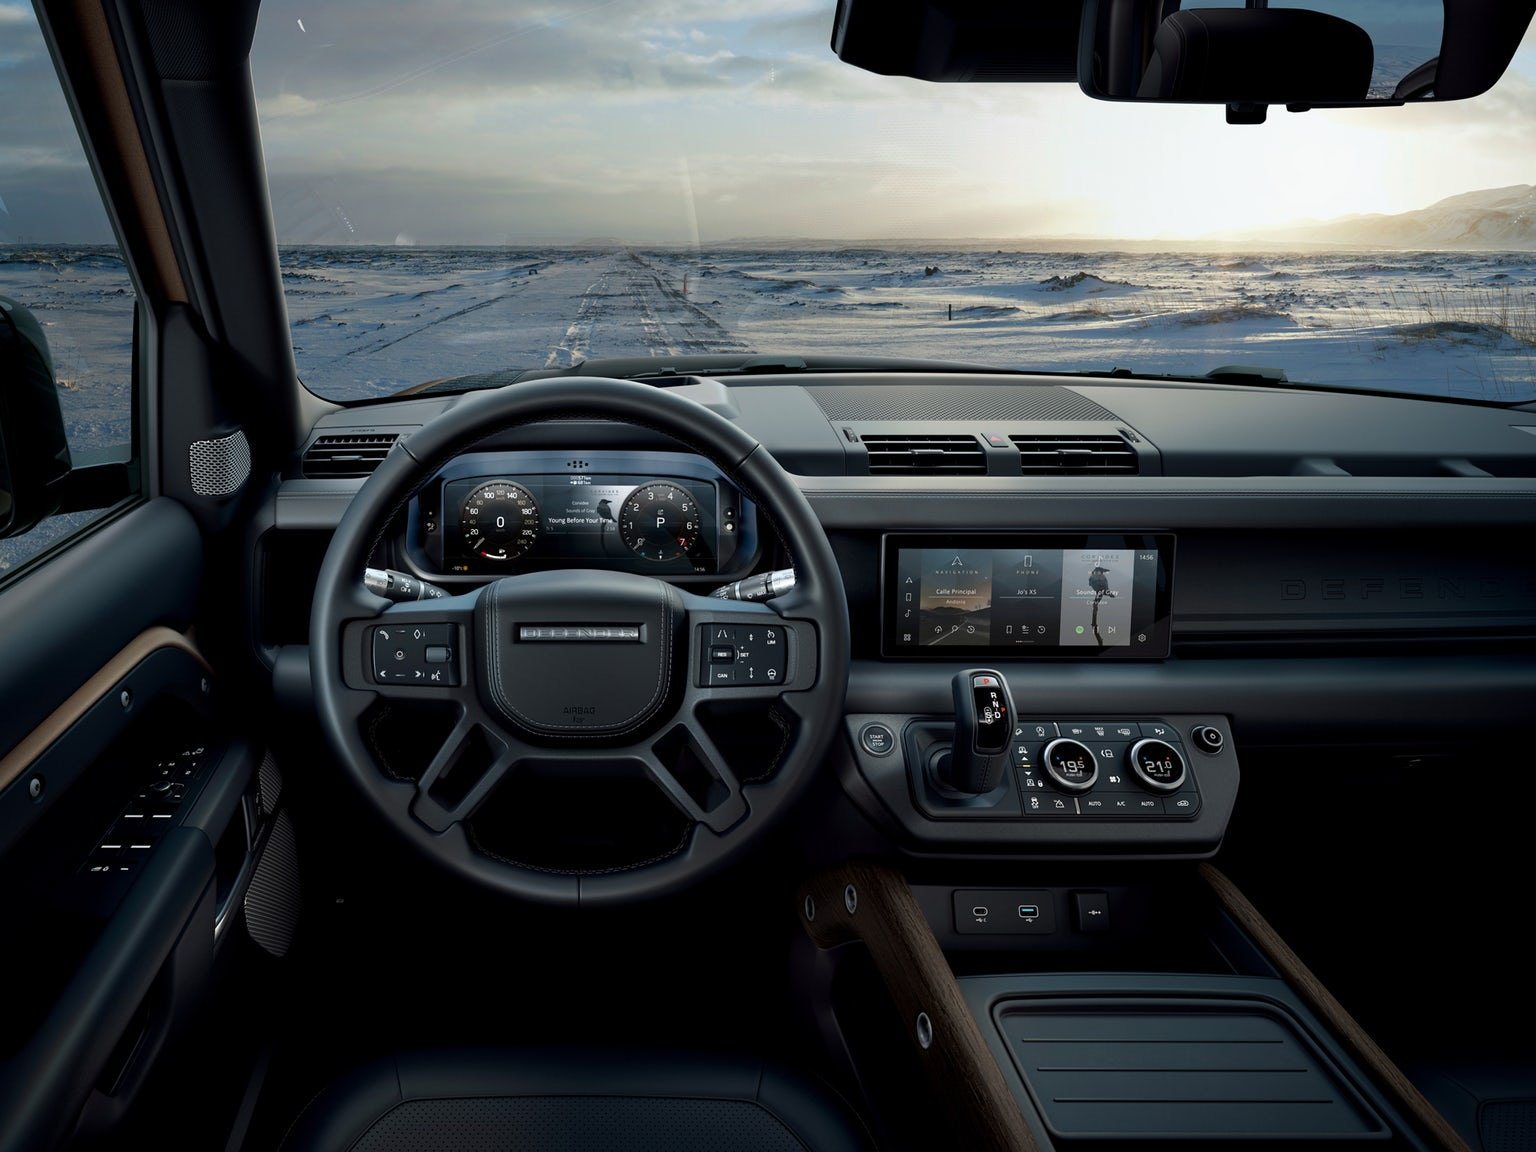 Land Rover Defender interior - Cockpit